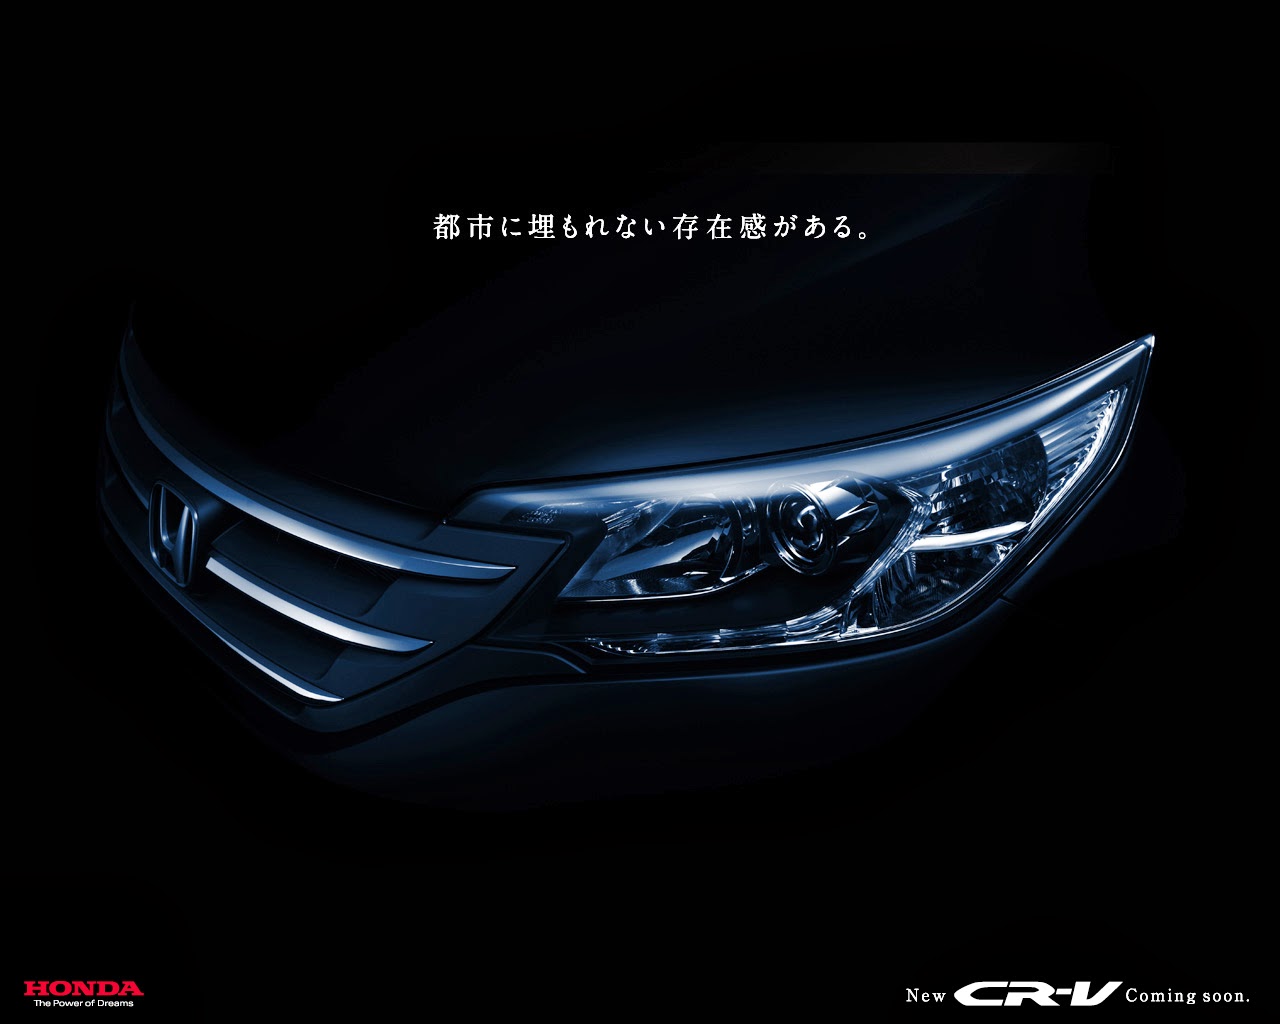 The all new 2012 Honda CRV